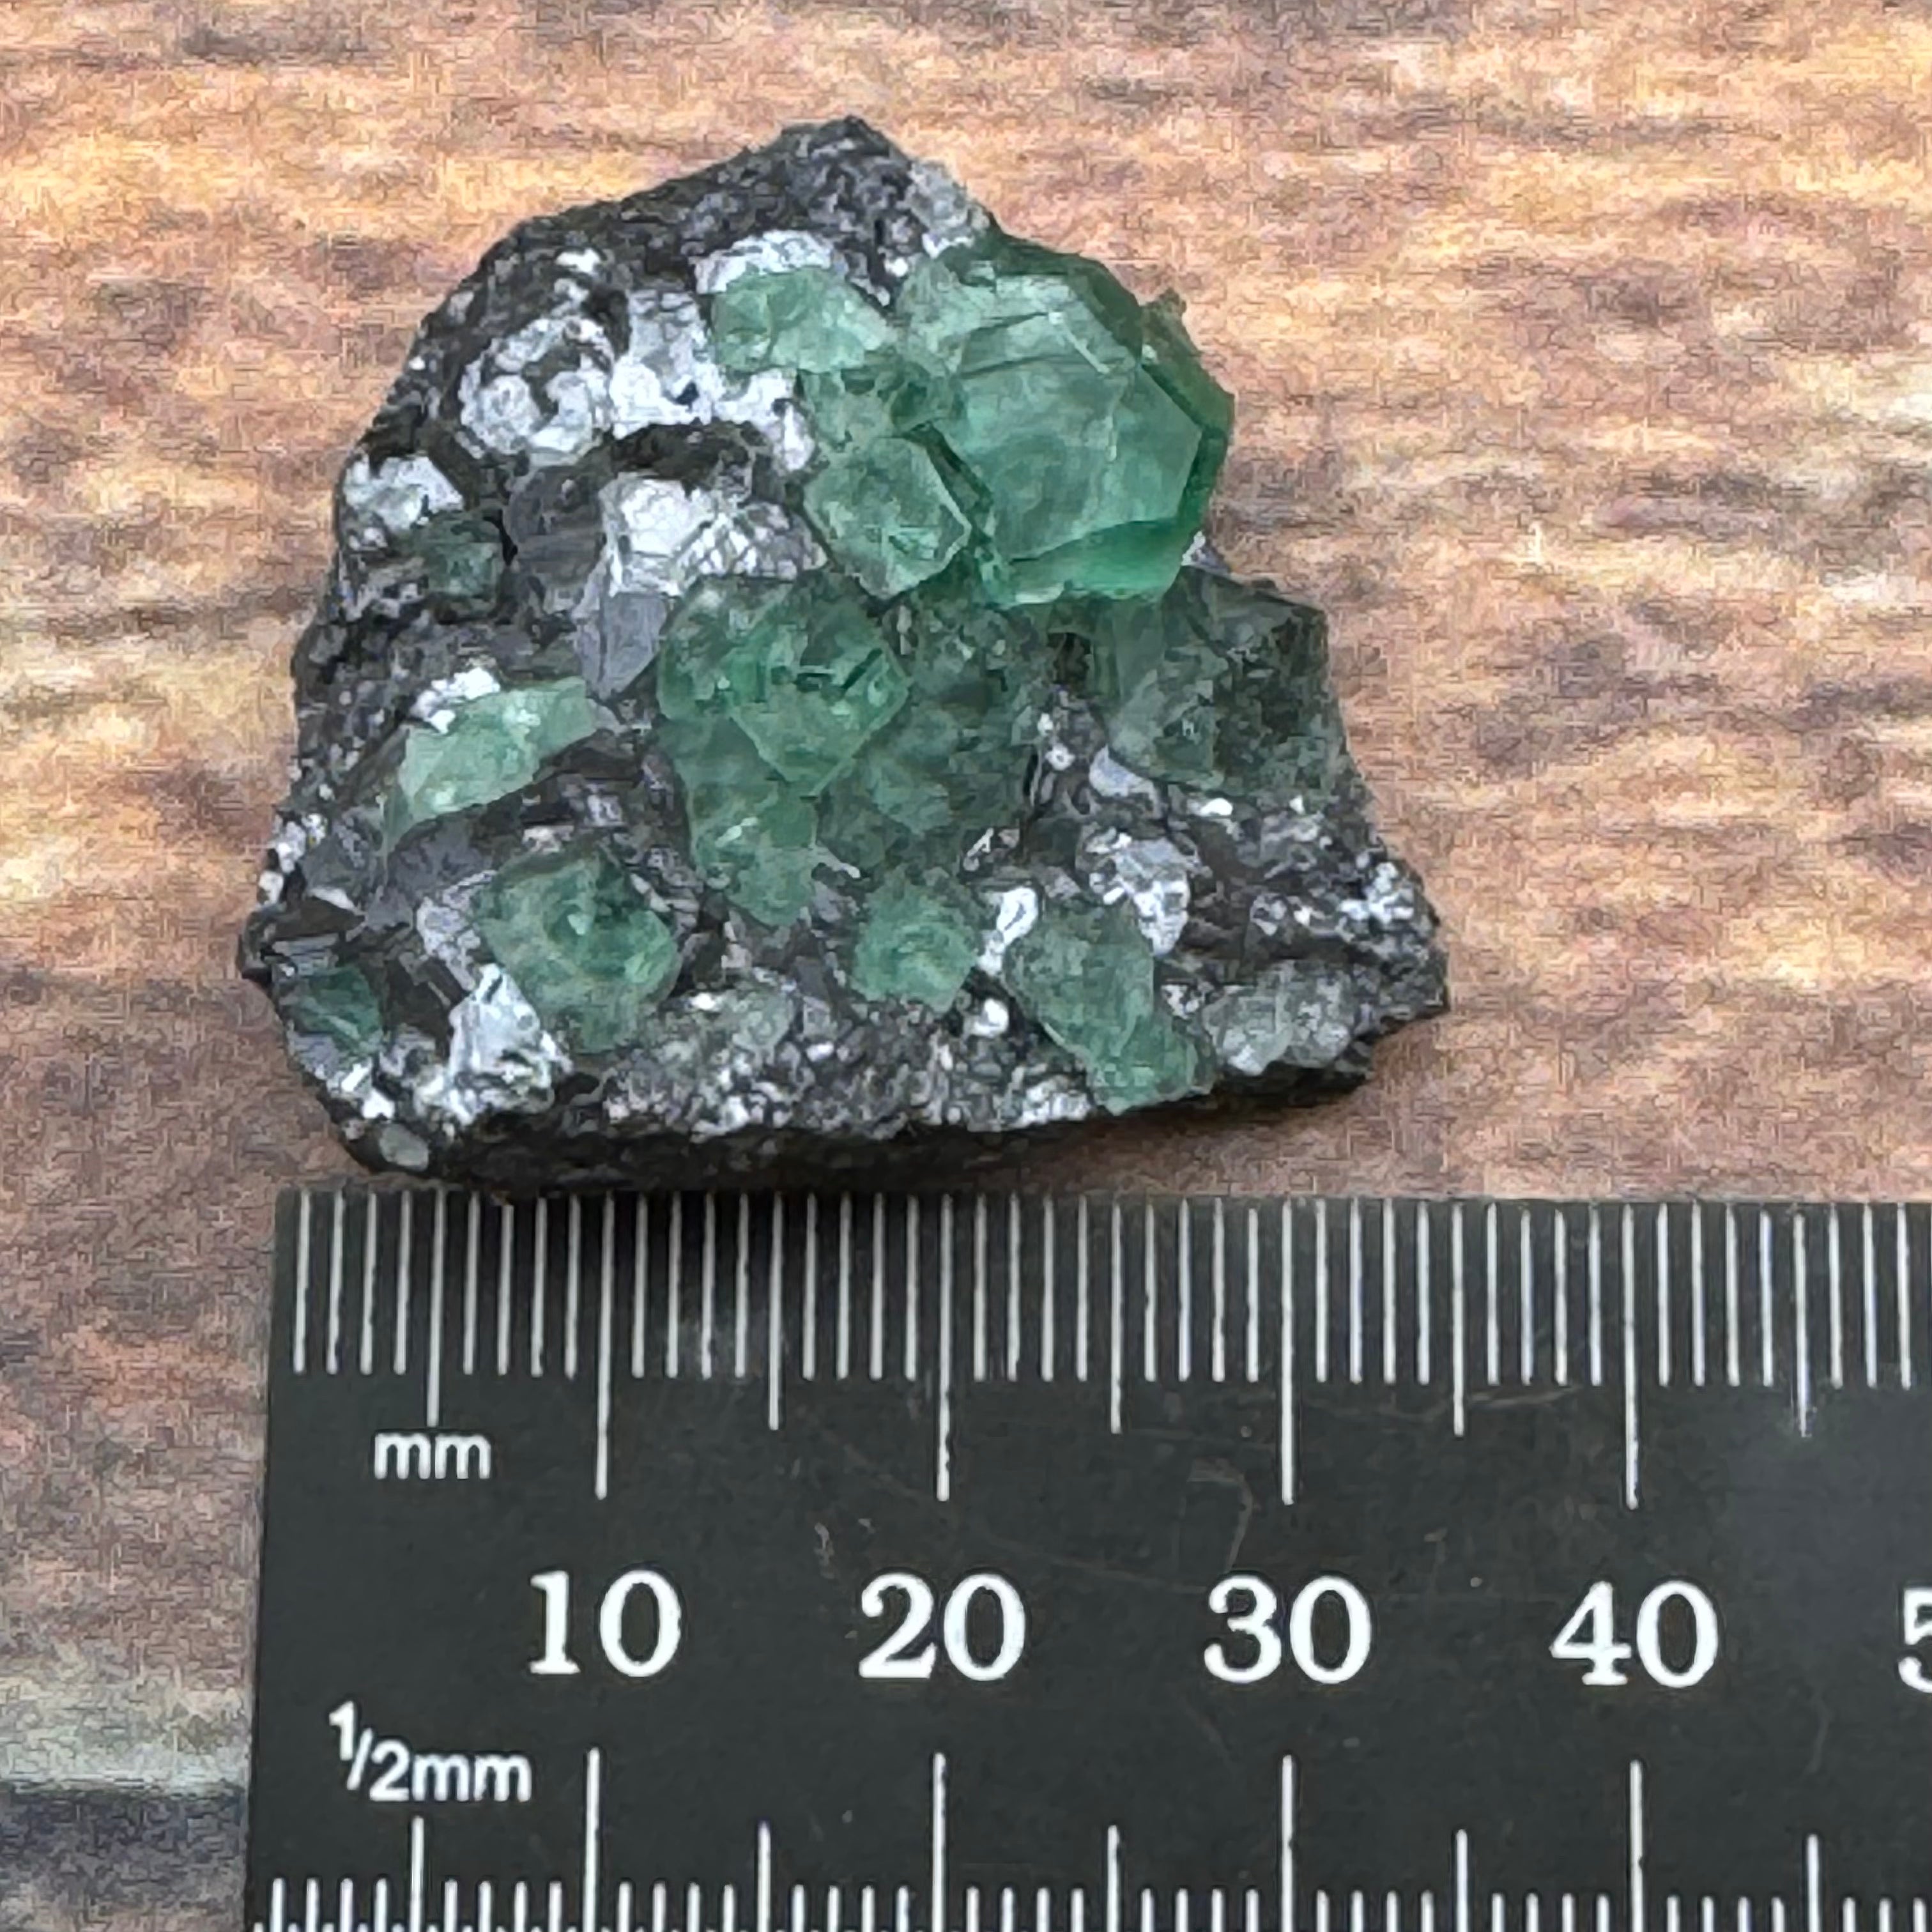 Peruvian Supernatural Green Fluorite - 076